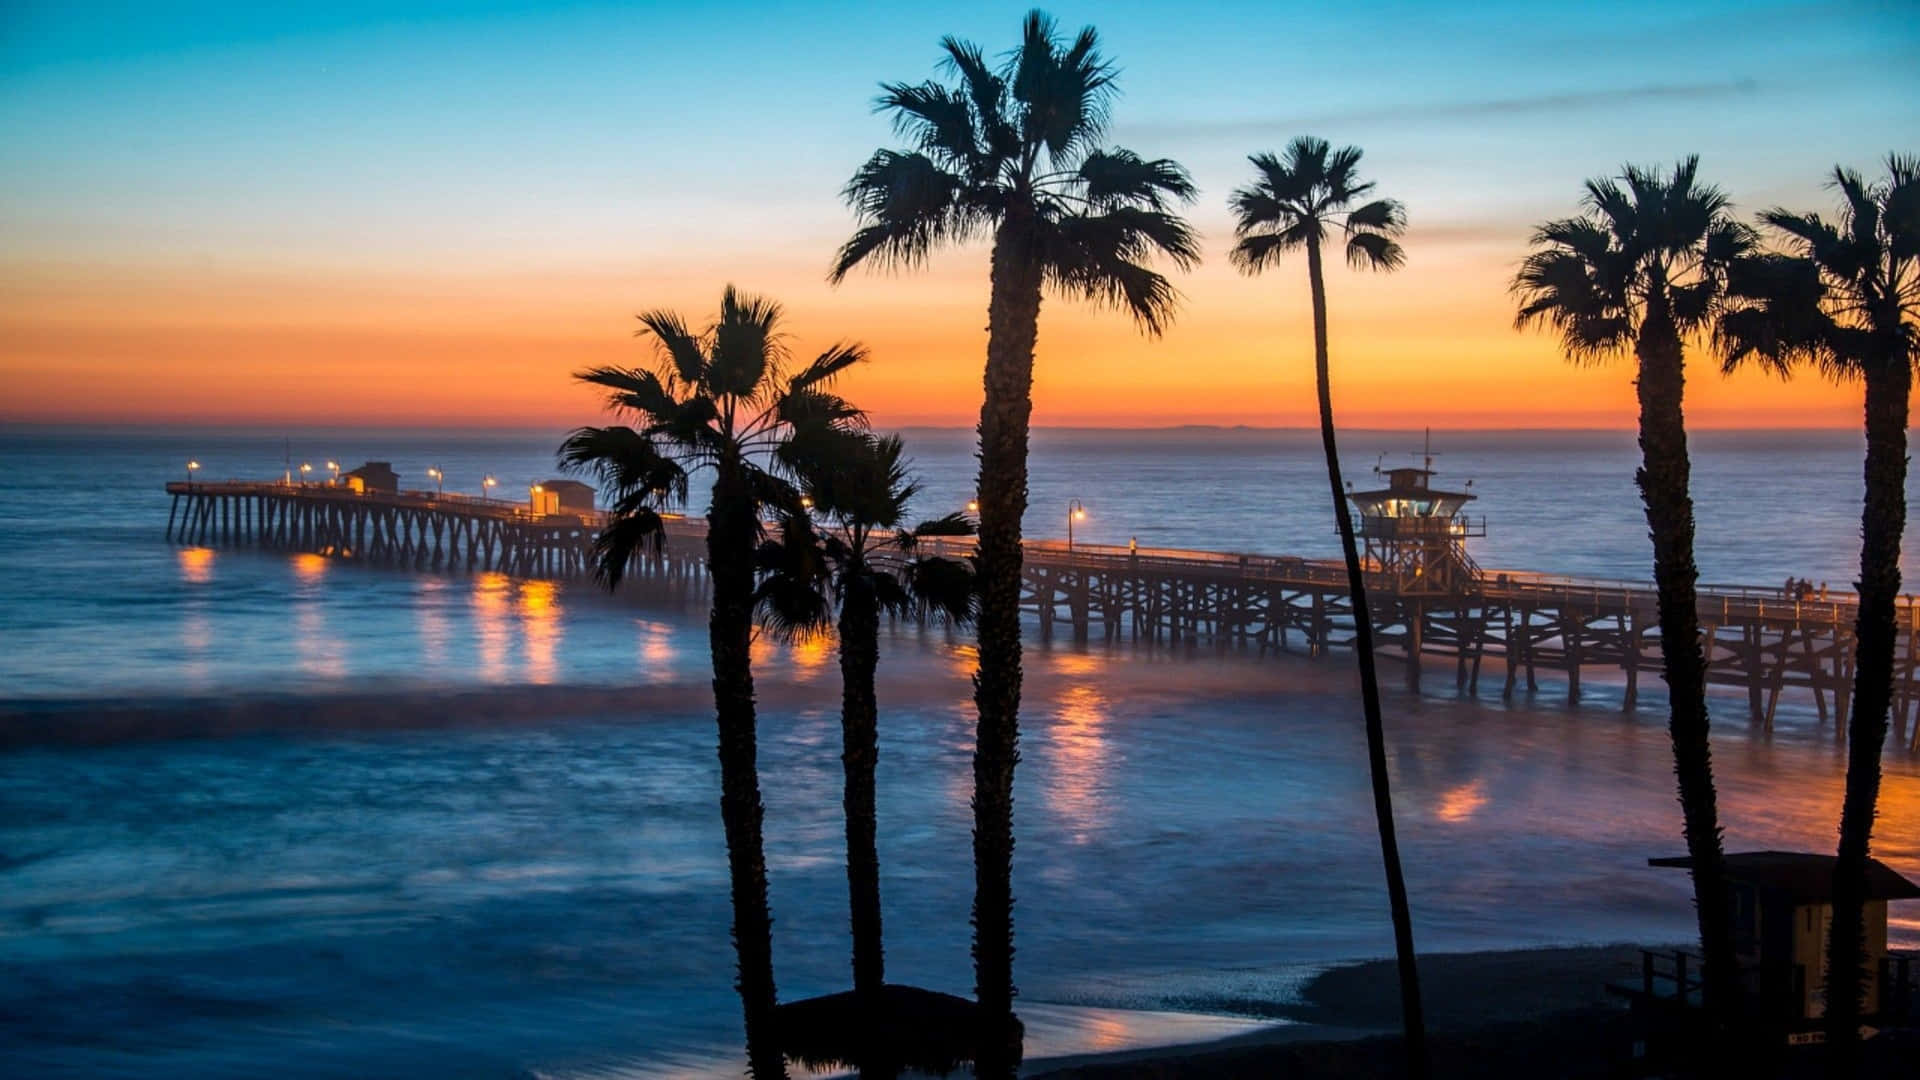 1440p Malibu Pier Palm Trees Background